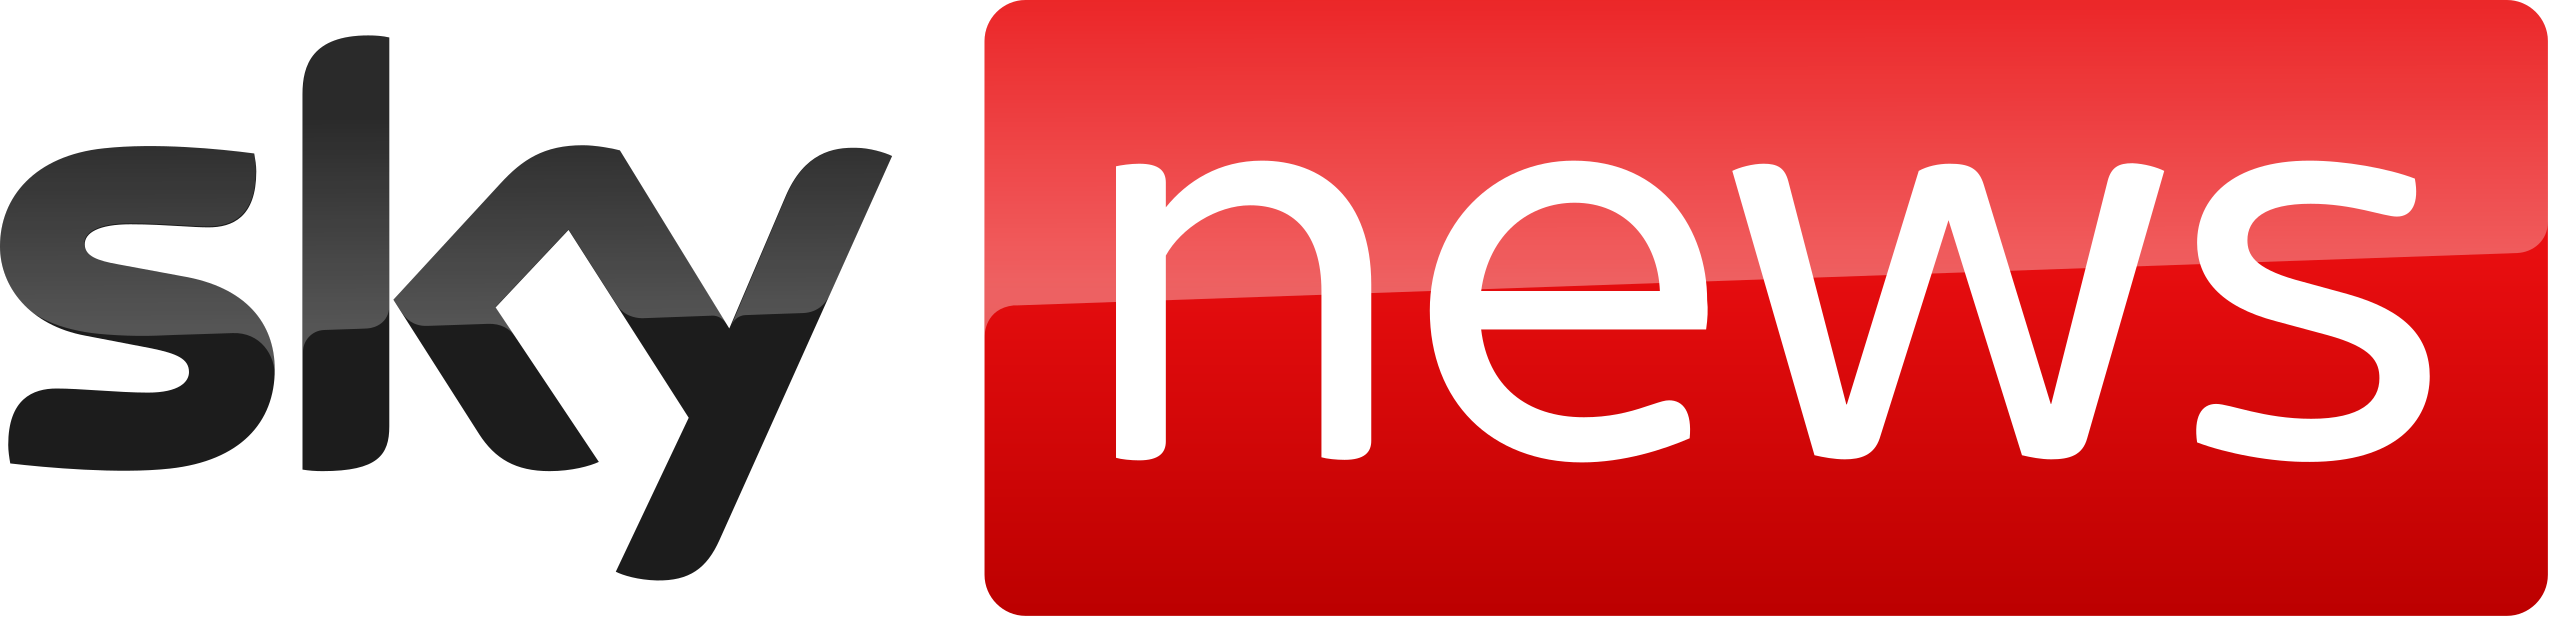 Sky_News_logo.svg